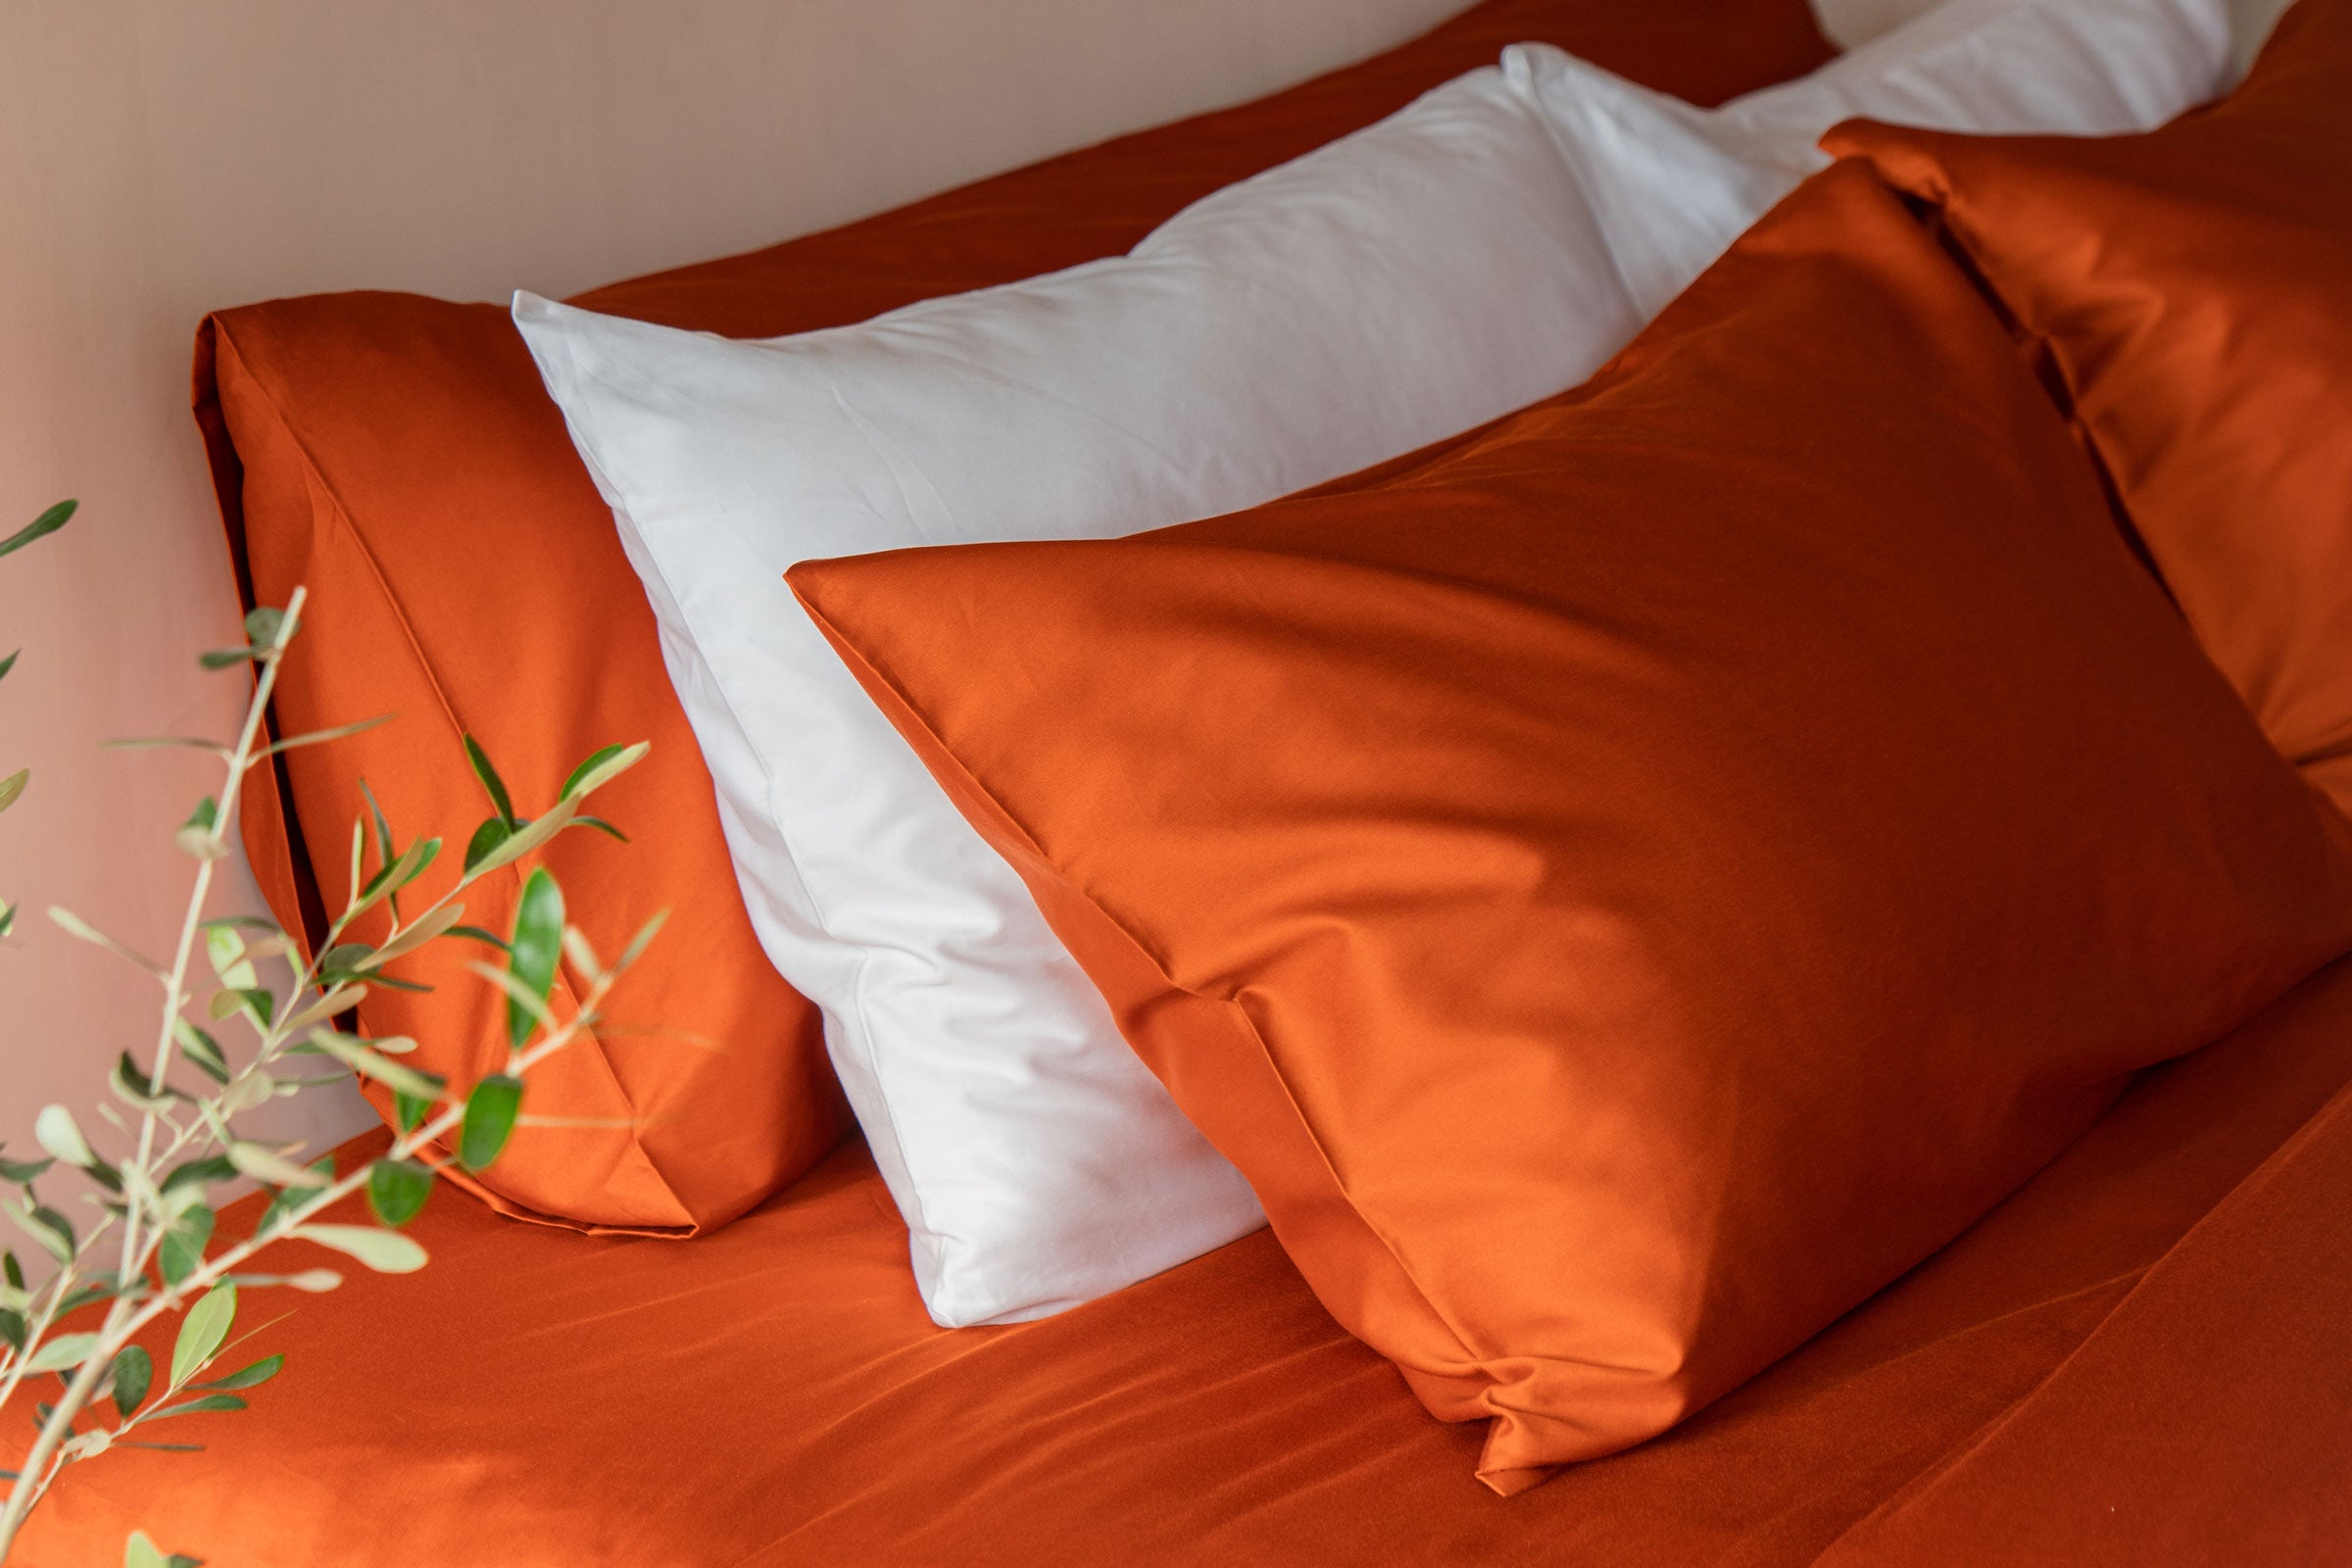 classic-autumn-duvet-cover-fitted-sheet-pillowcase-pair-body-pillow-white-pillowcase-pair-by-sojao.jpg